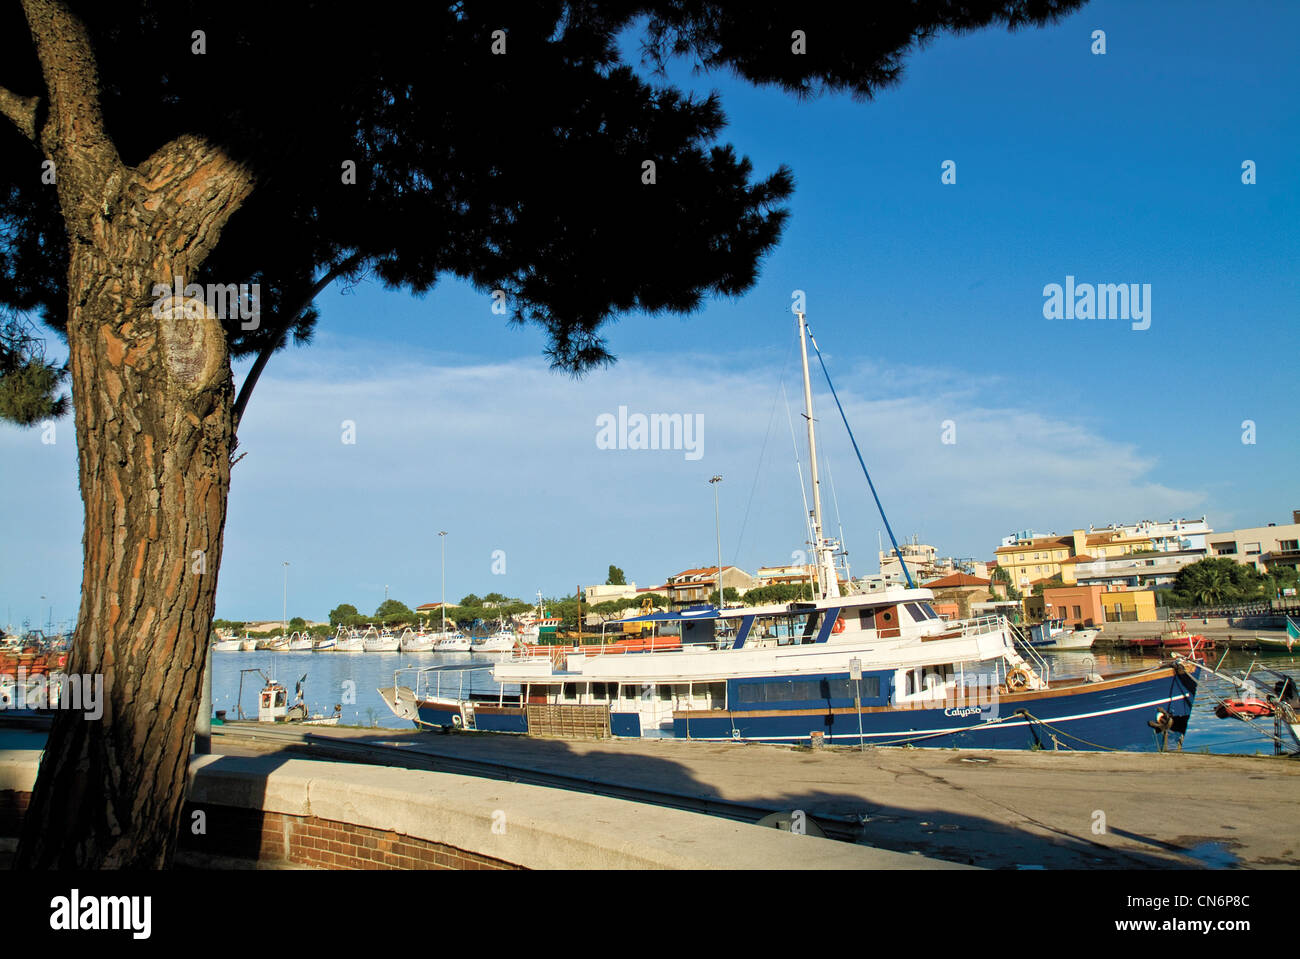 Europe Italy Abruzzo Pescara the Harbor Stock Photo